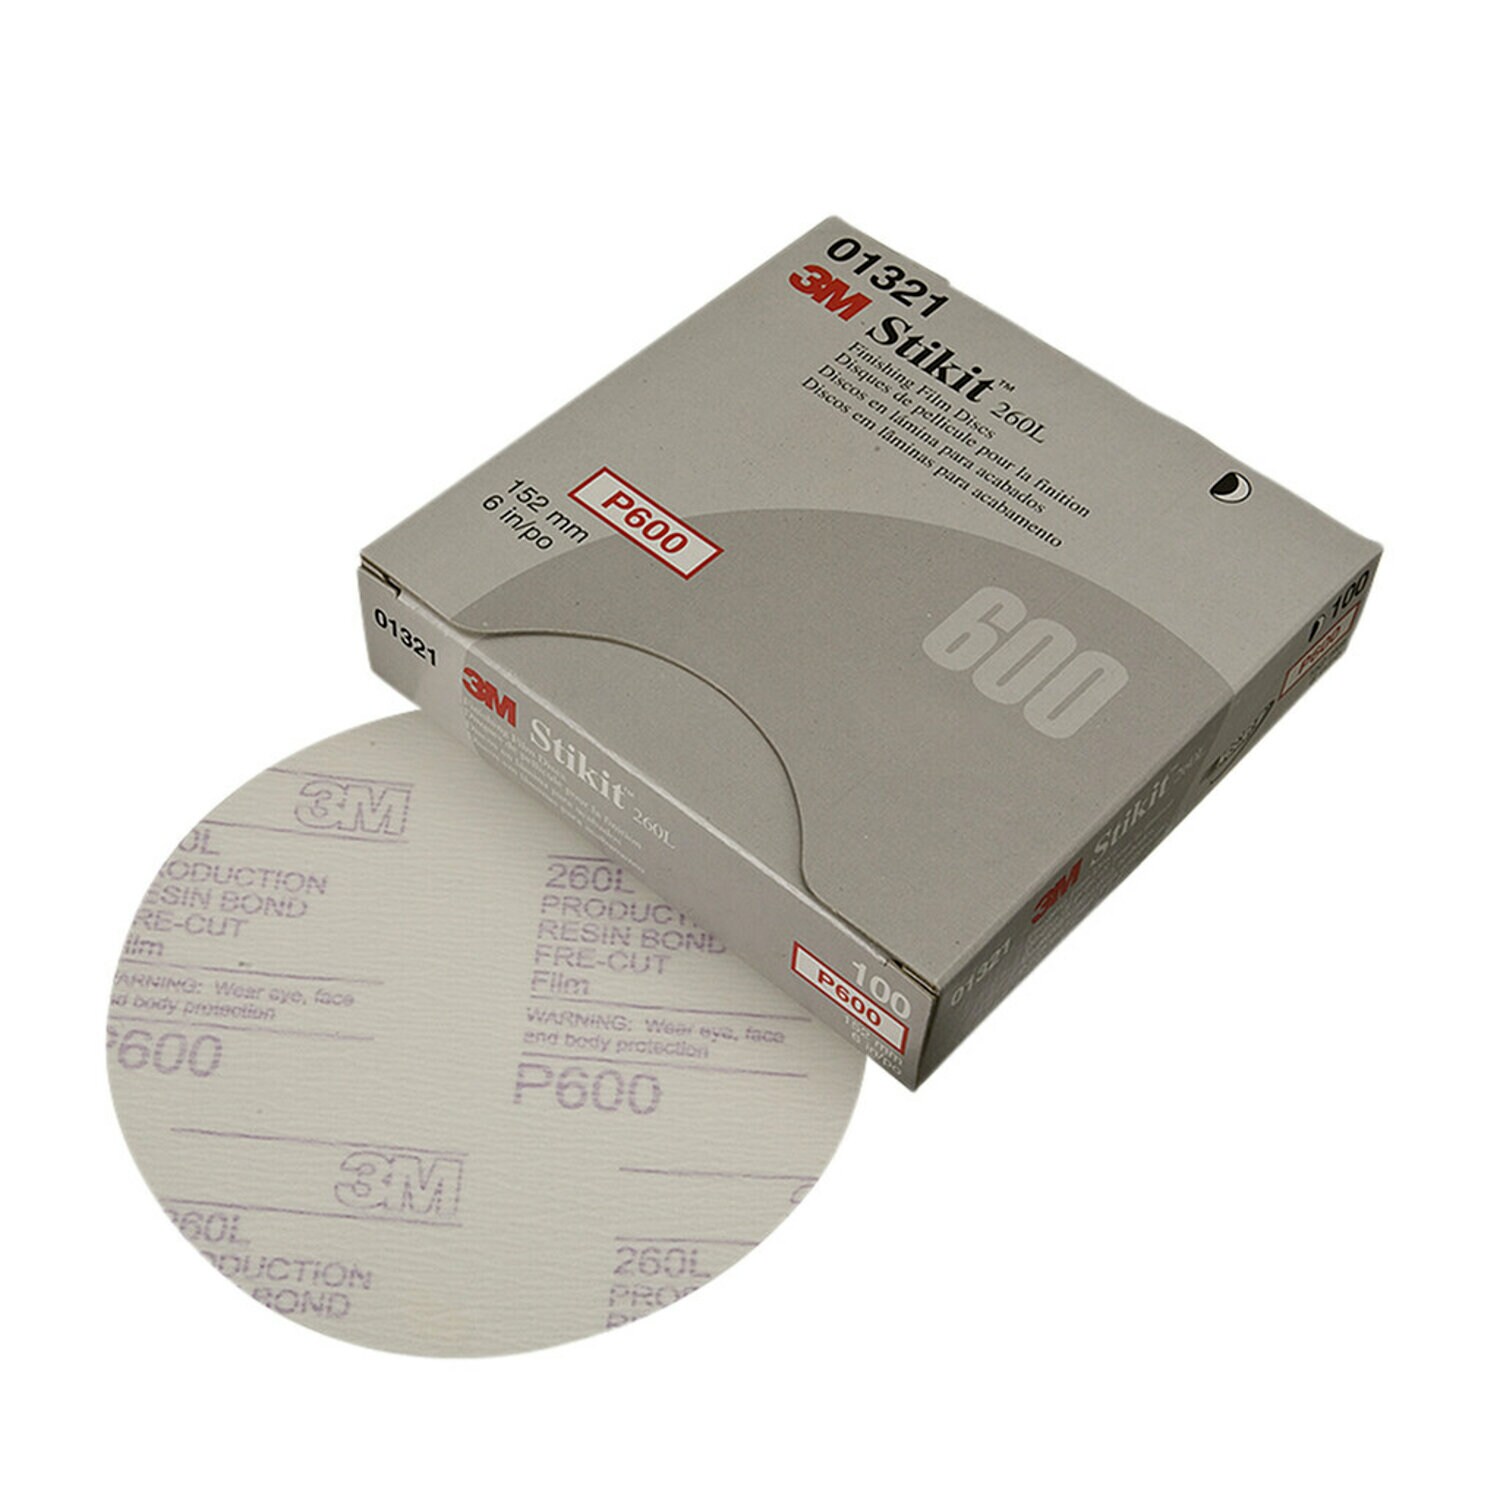 7000118151 - 3M Stikit Finishing Film Abrasive Disc 260L, 01321, 6 in, P600, 100
discs per carton, 4 cartons per case